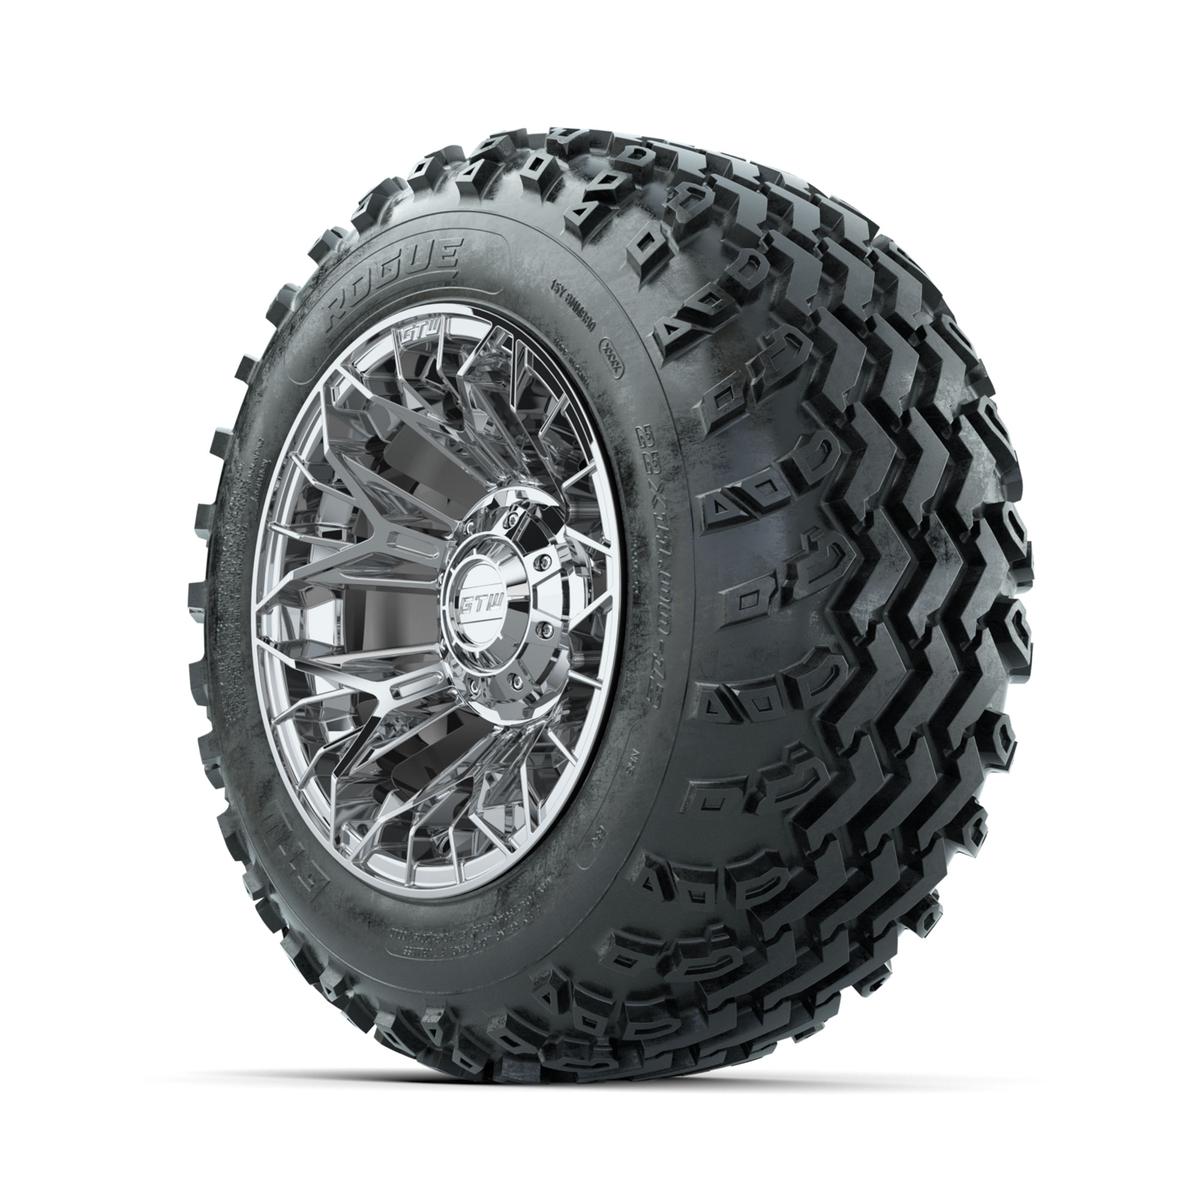 GTW Stellar Chrome 12 in Wheels with 22x11.00-12 Rogue All Terrain Tires – Full Set